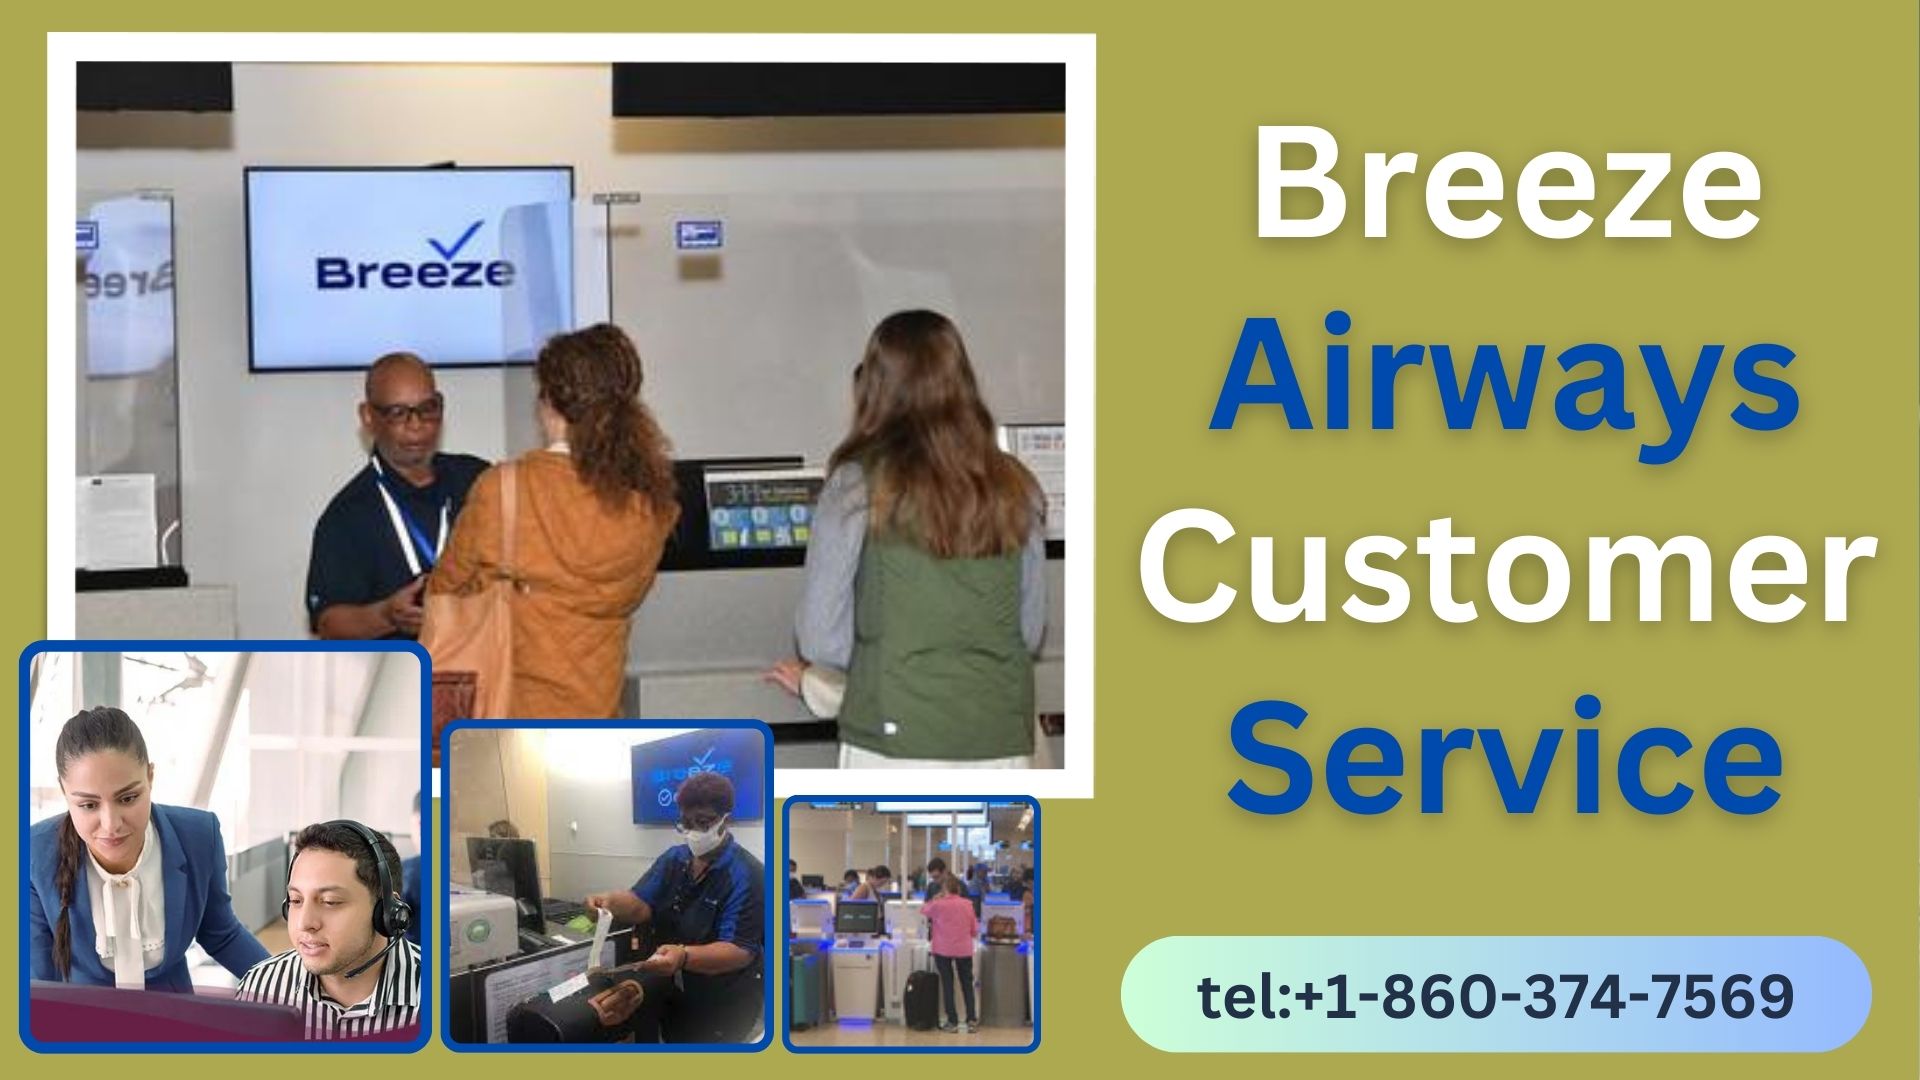 Breeze Airways customer service